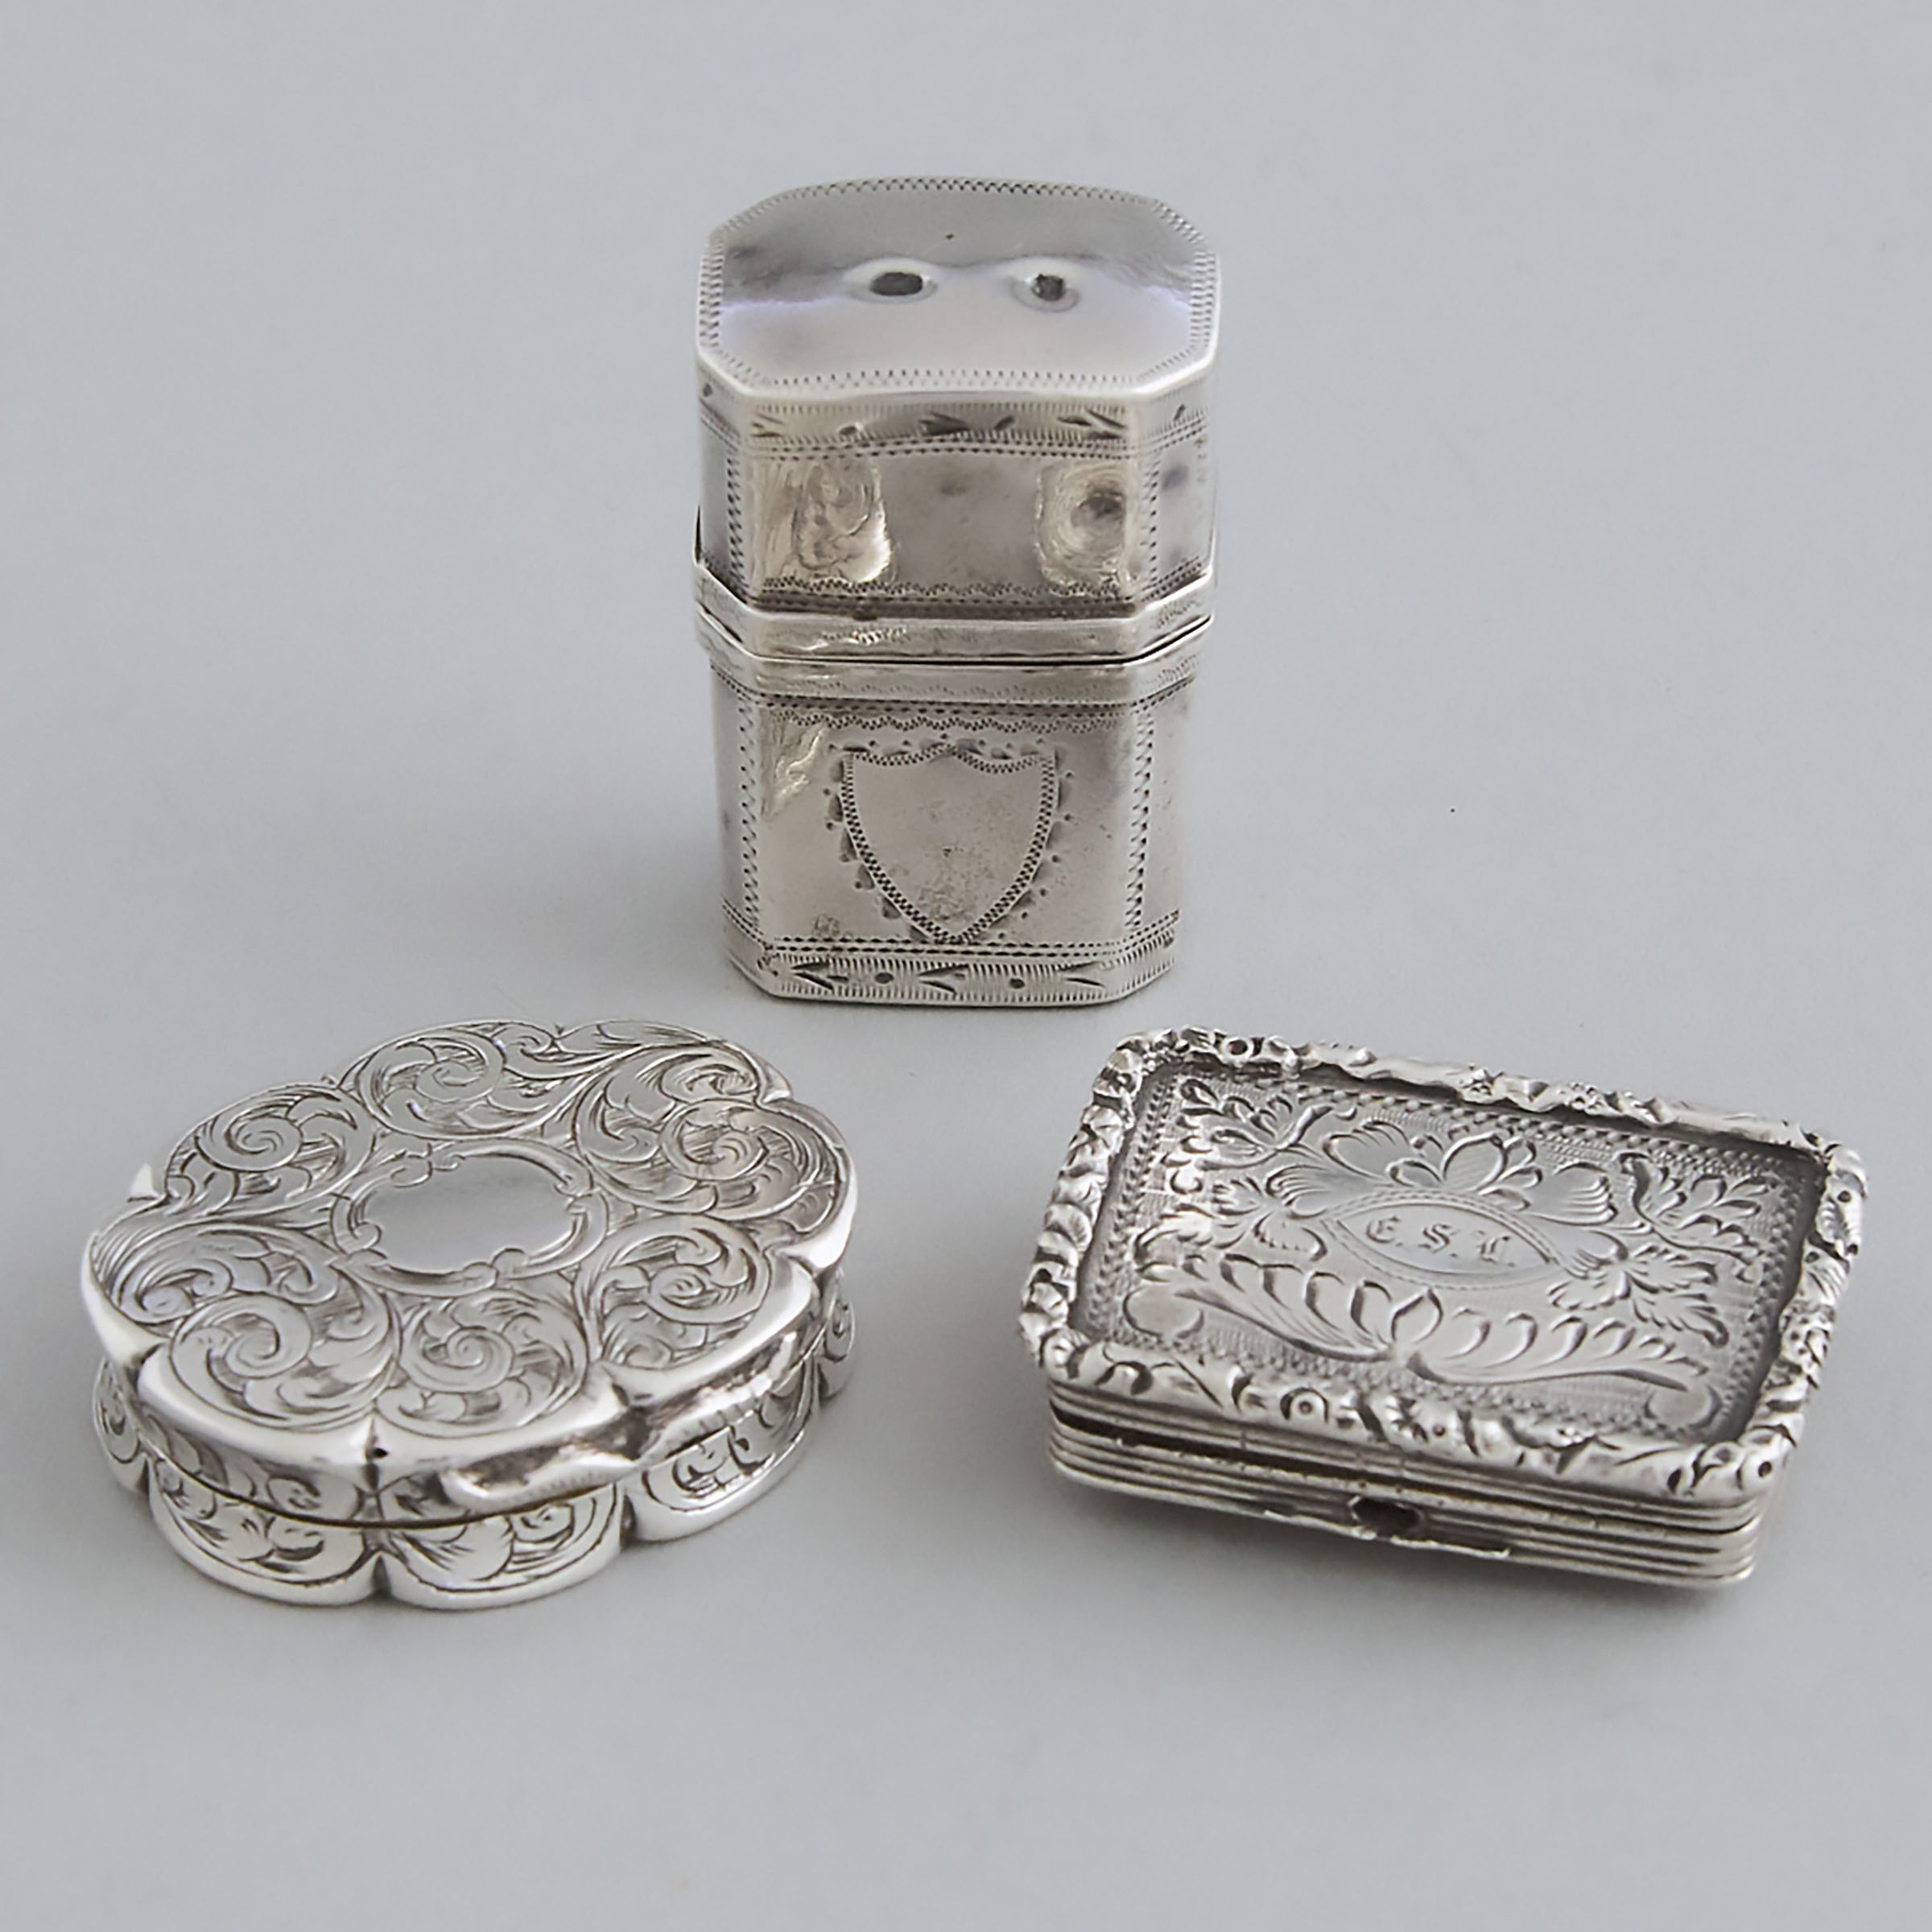 George III Silver Perfume Bottle Case, Birmingham, c.1800, and Two Later Vinaigrettes, John Bettridge, 1823 and Edward Smith, 1845